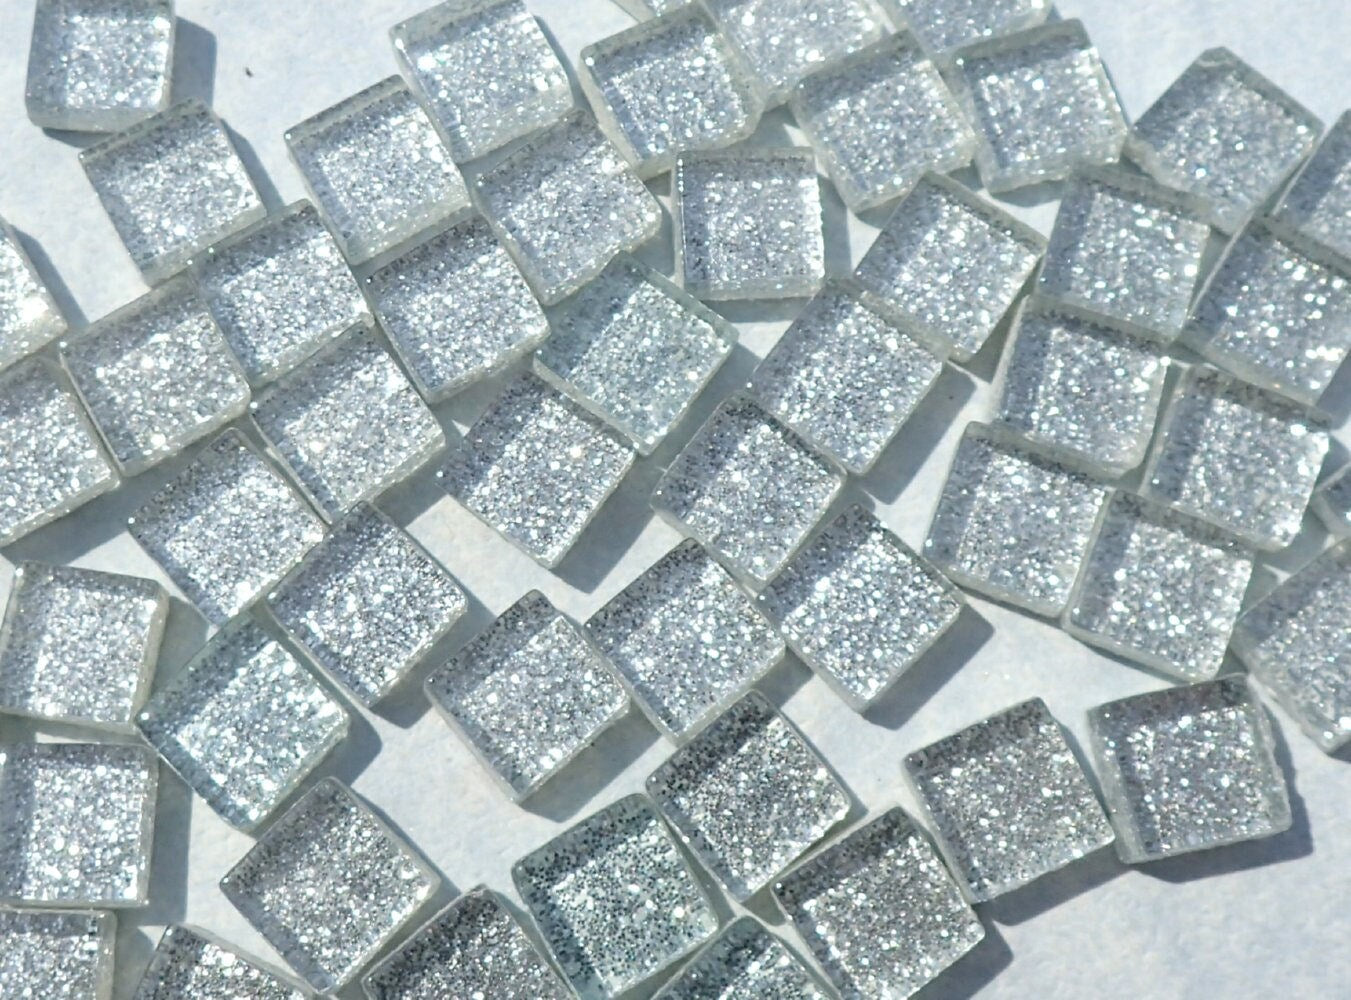 Silver Glitter Tiles - 1 cm - 100g - Over 100 Metallic Glass Tiles - Shiny Silver